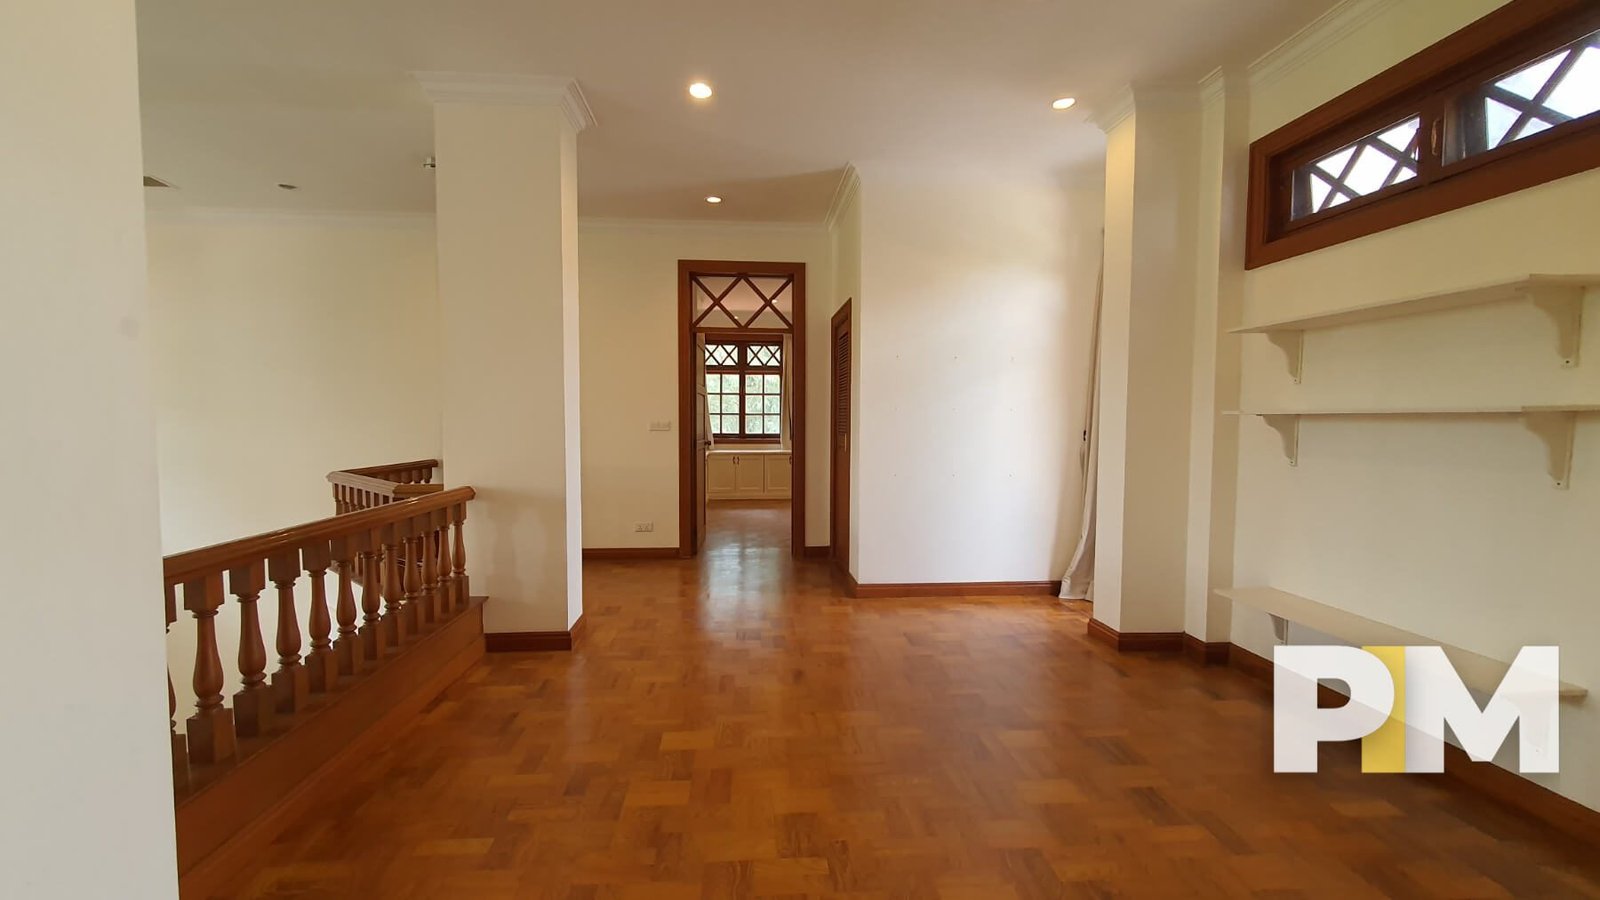 Upstair landing area - Real Estate in Yangon